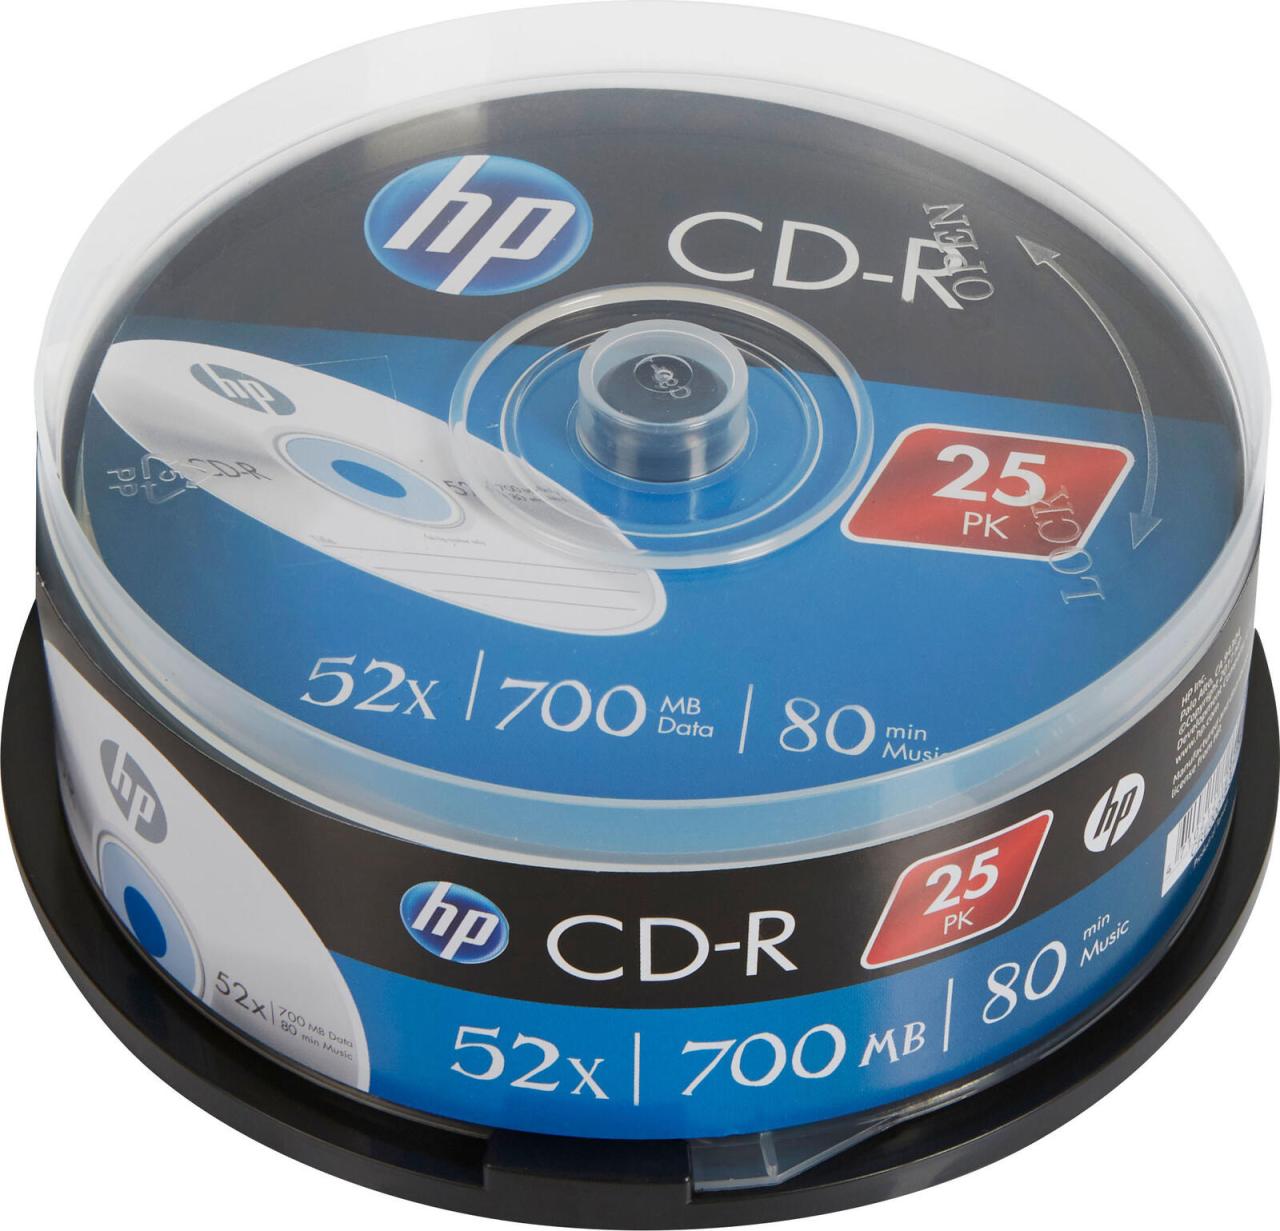 HP CD-R 700MB 52x 25er Cakebox Spindel von HP